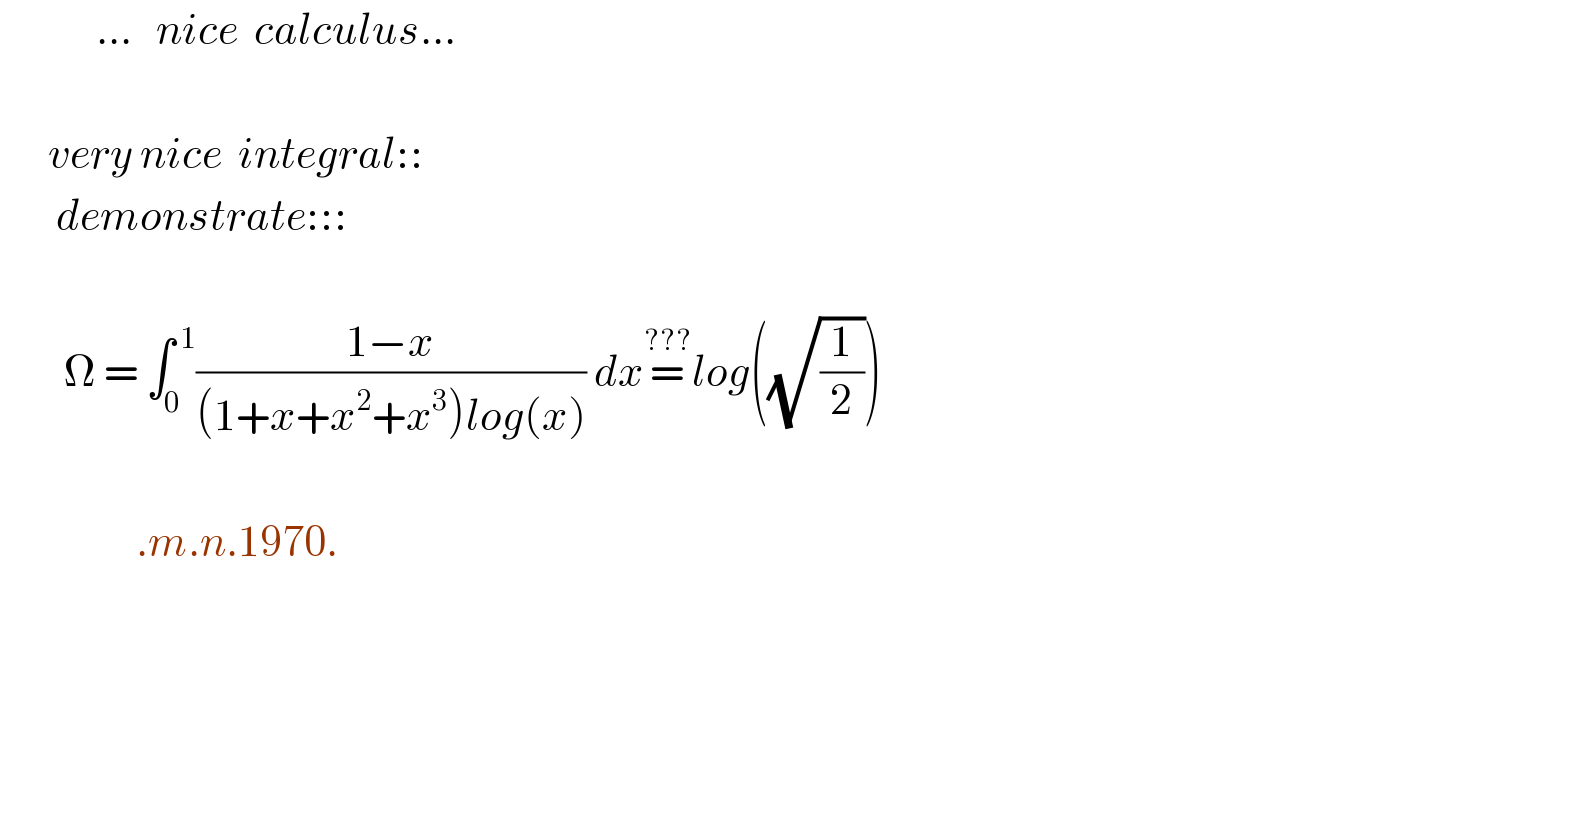             ...   nice  calculus...          very nice  integral::         demonstrate:::            Ω = ∫_0 ^( 1) ((1−x)/((1+x+x^2 +x^3 )log(x))) dx=^(???) log((√(1/2)))                         .m.n.1970.                                            